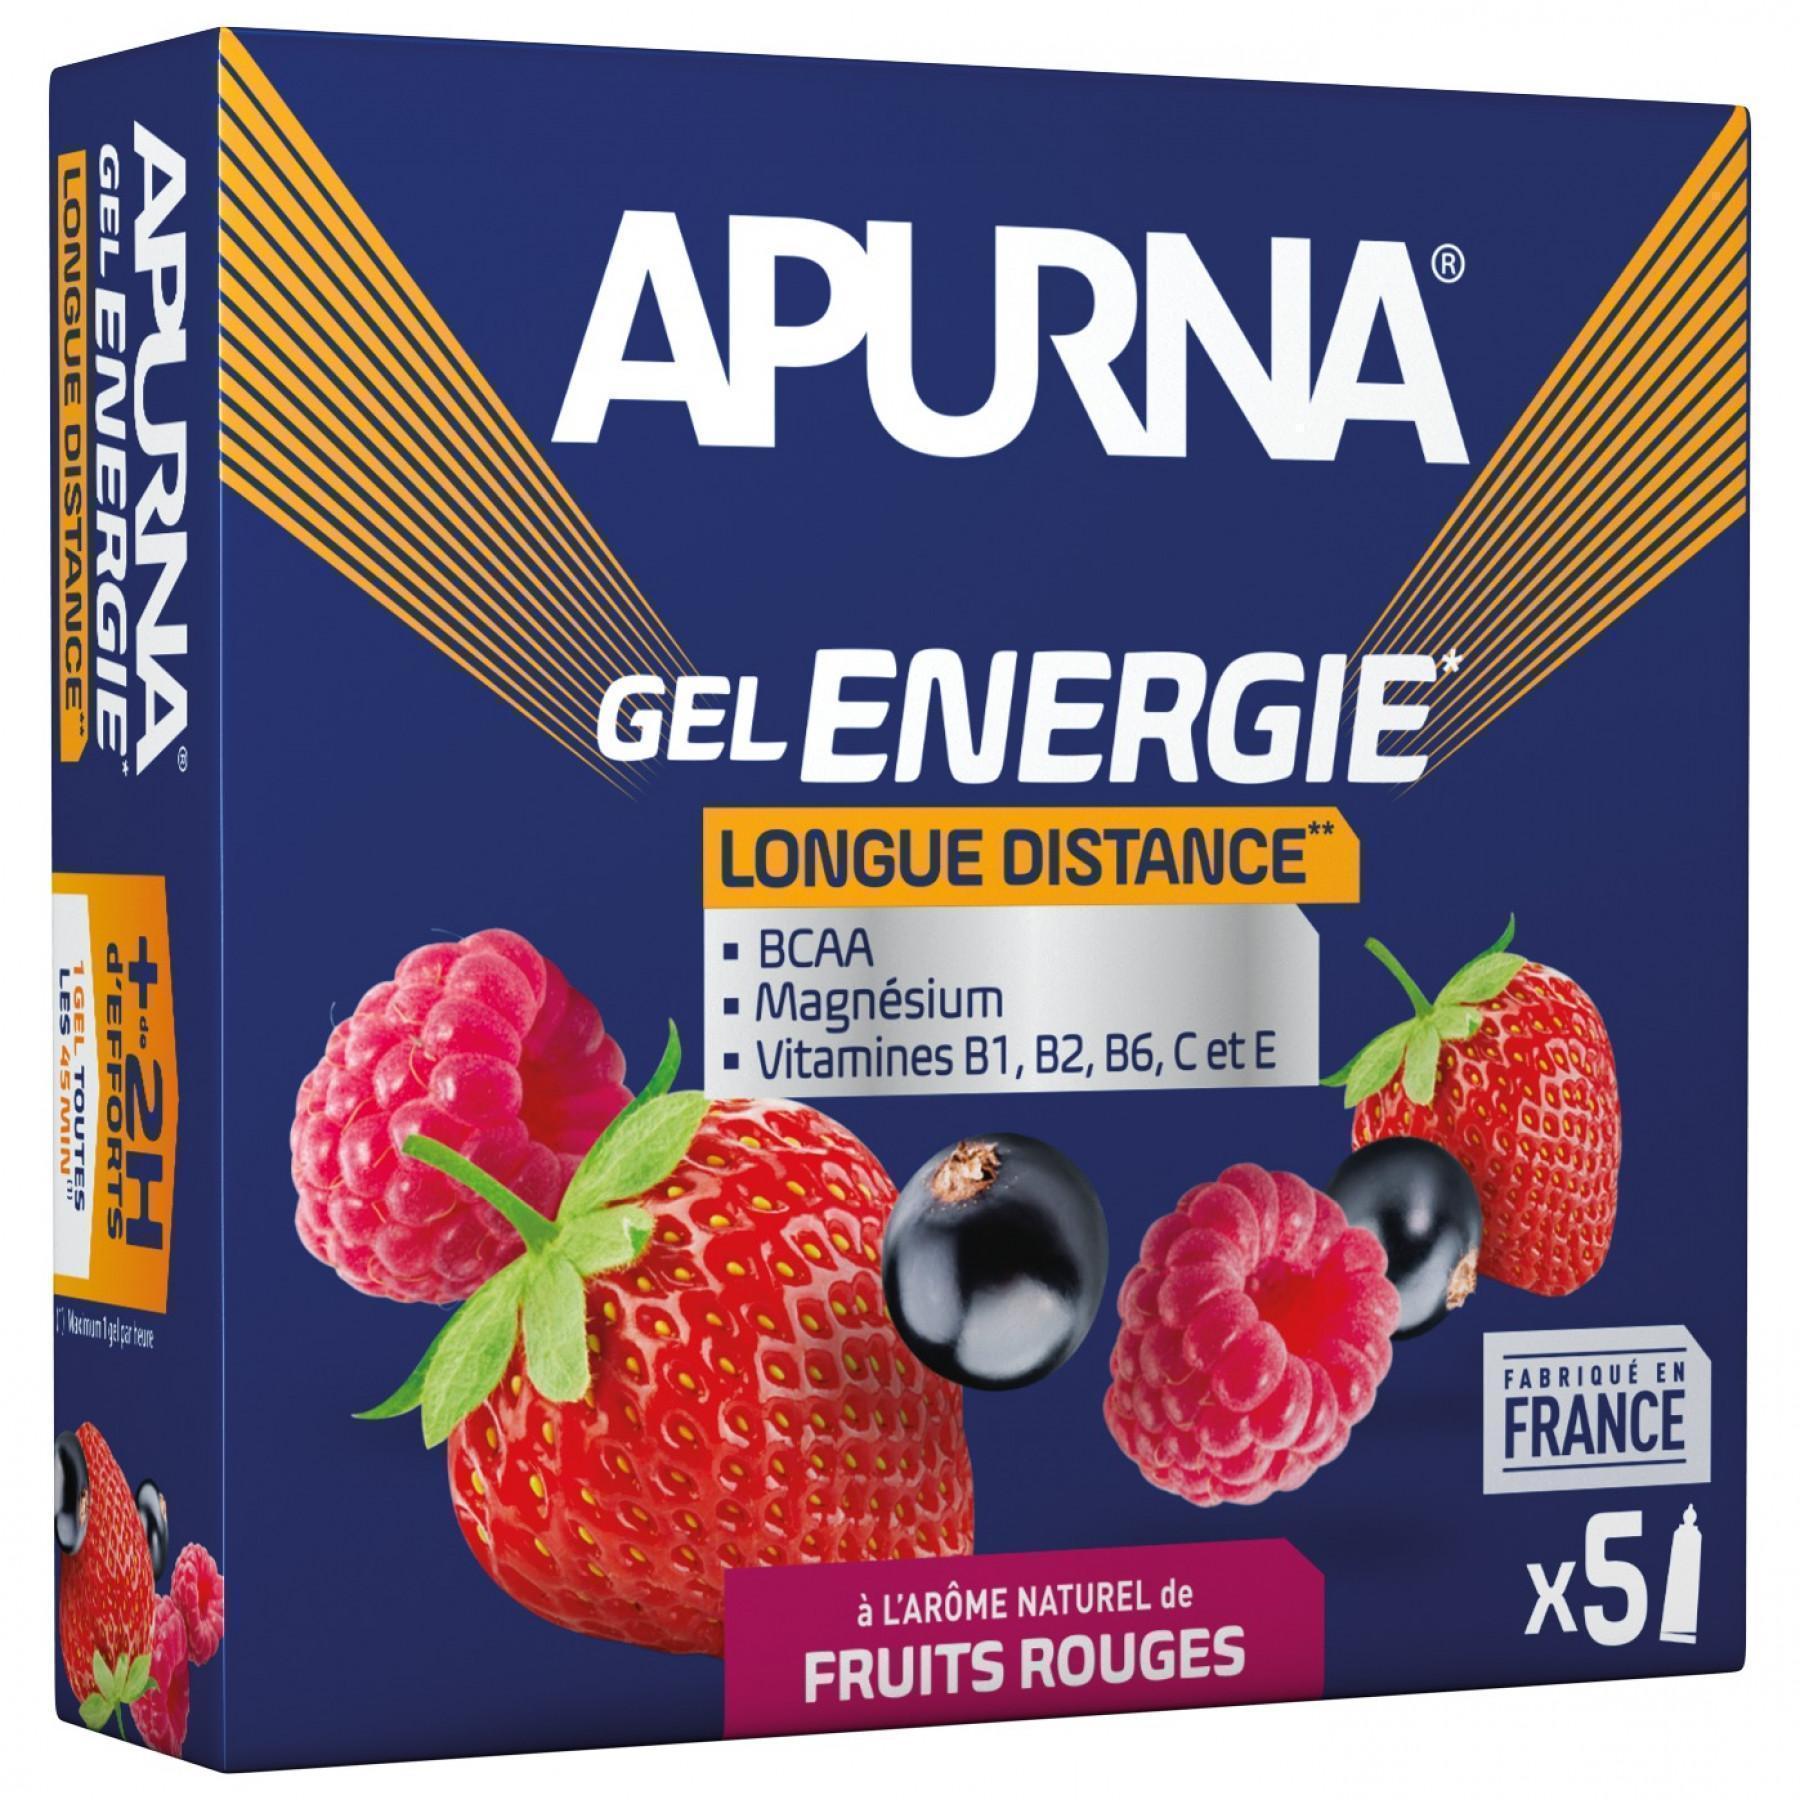 Set van 5 gels Apurna Energie Longue Distance Fruits Rouges - 35g